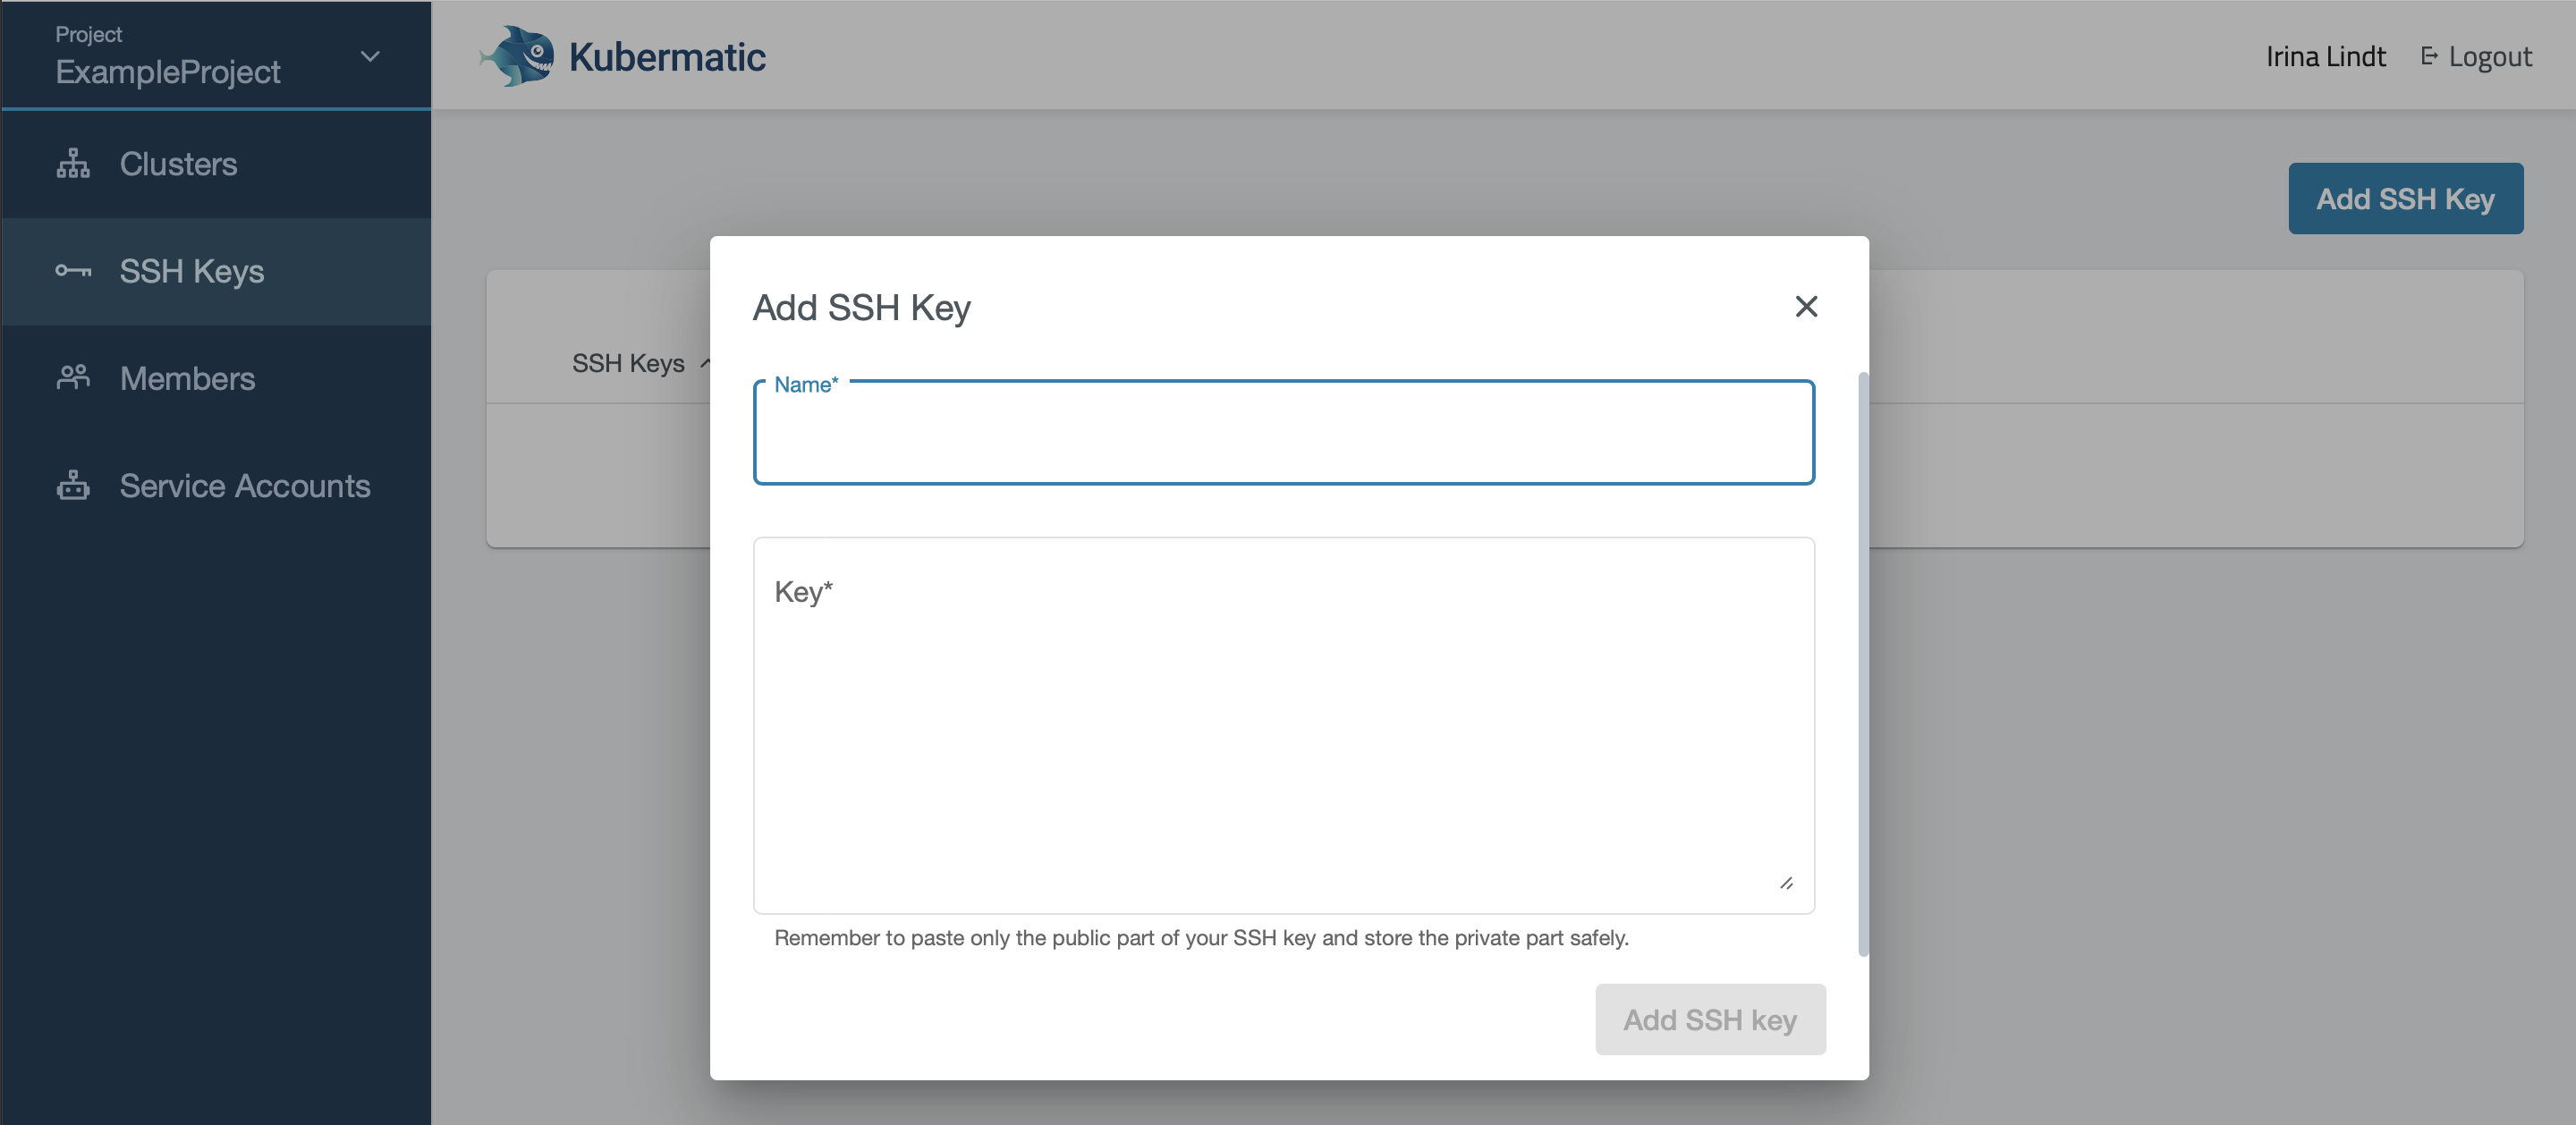 Dialog to add an SSH key